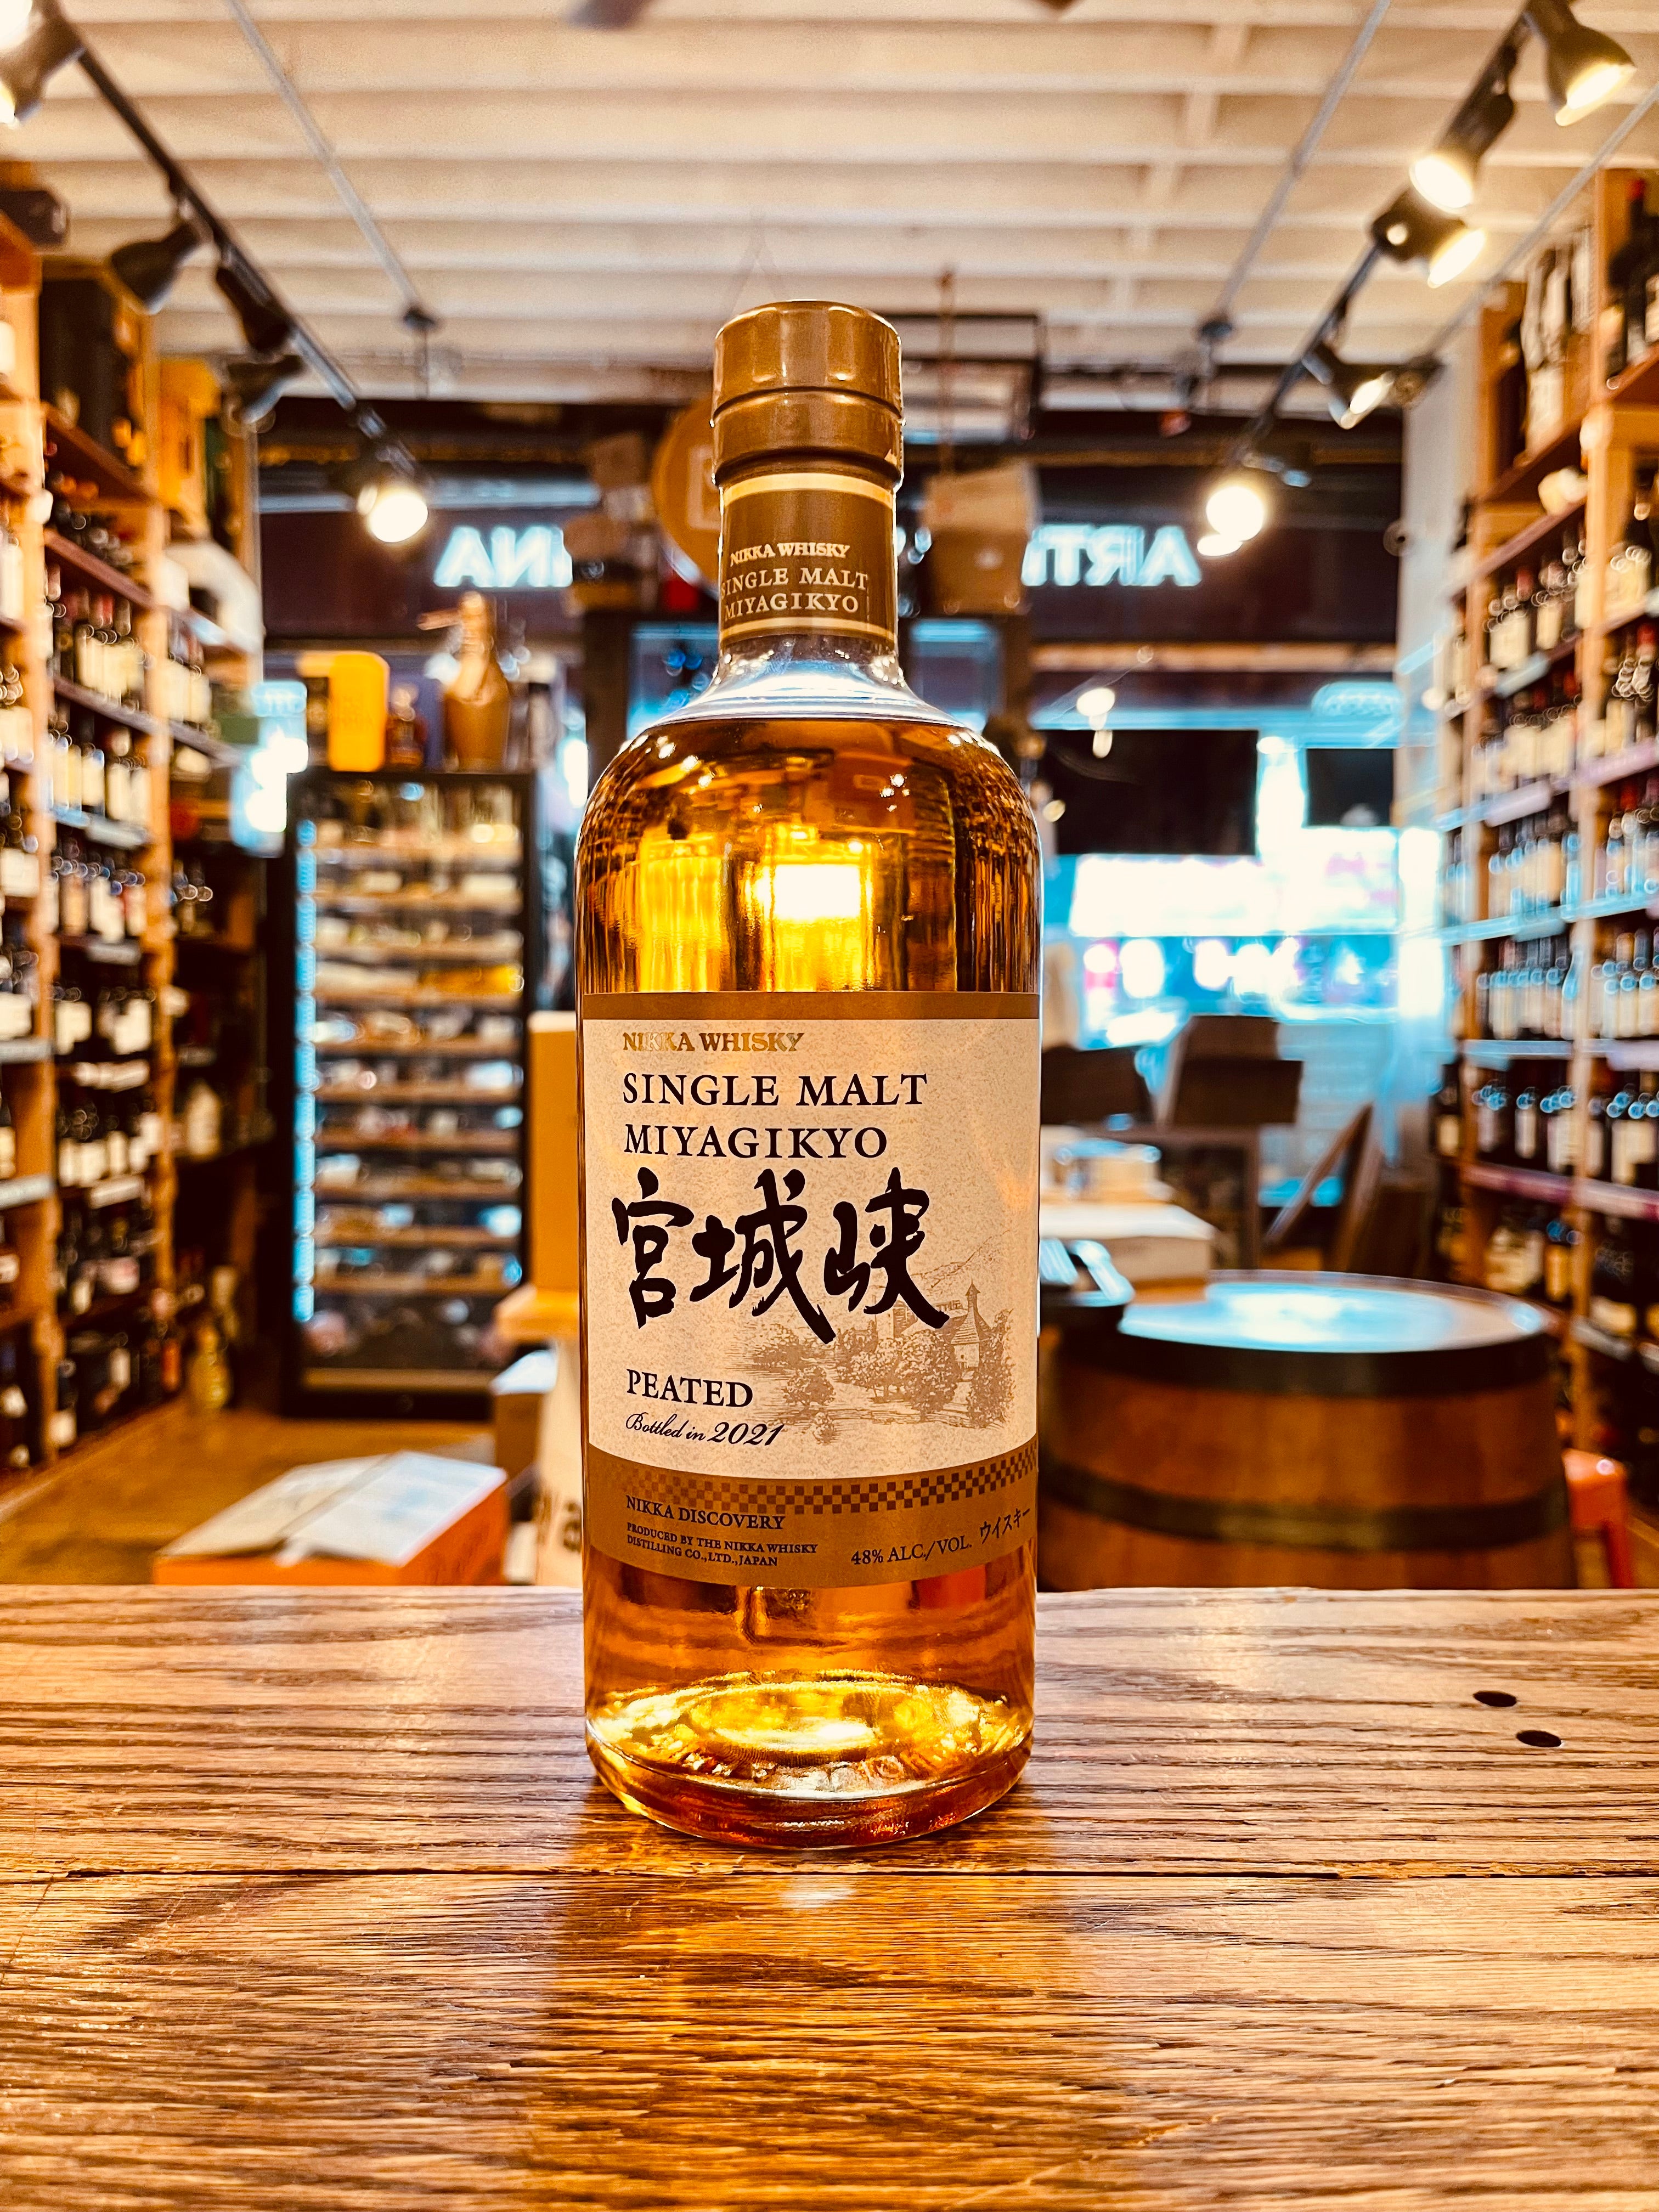 Nikka Whisky - Japanese Single Malt Whisky - Miyagikyo Discovery